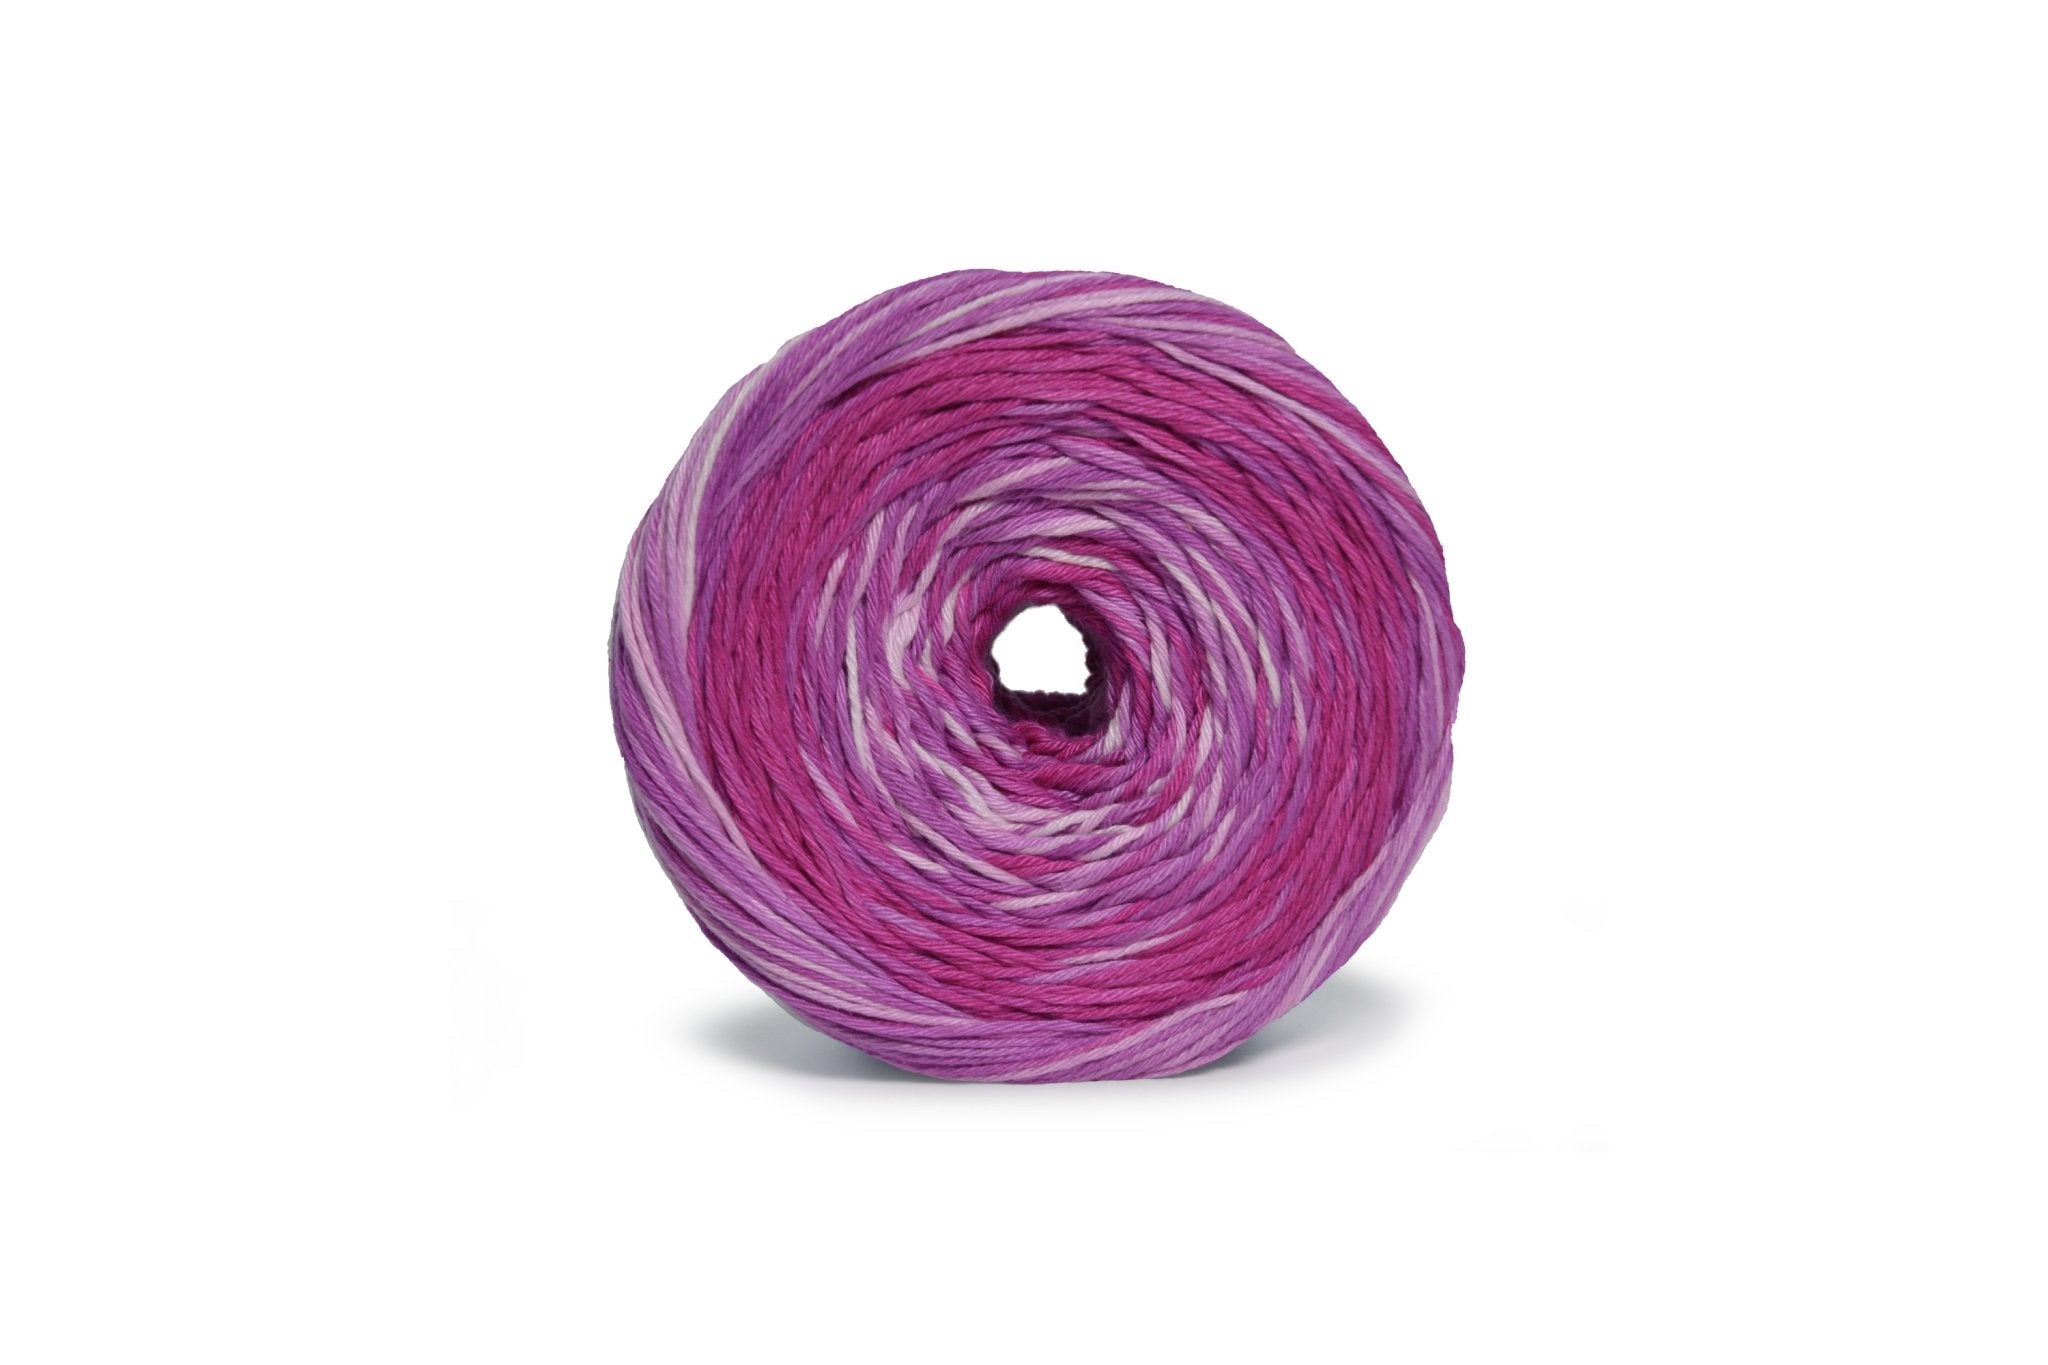 Inlove Chunky Cotton Yarn by Circulo Cameo 3201